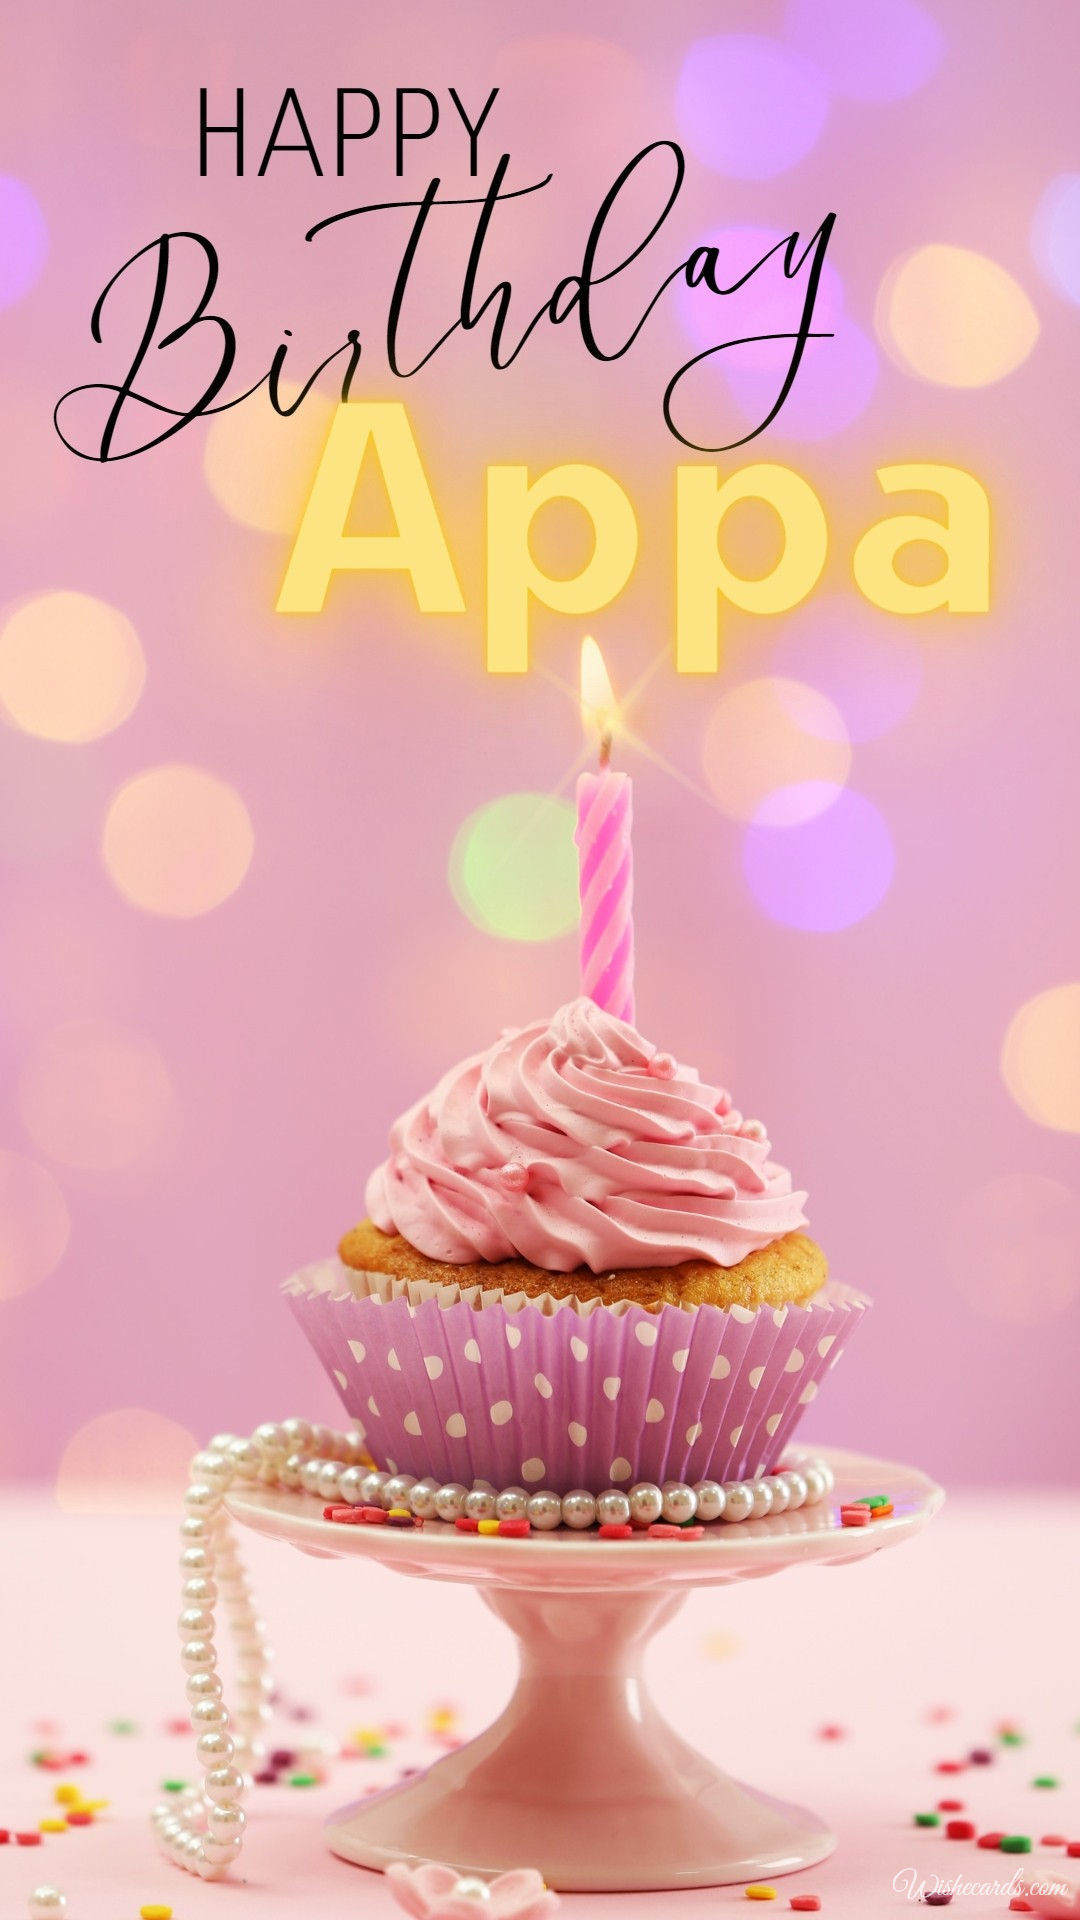 Happy Birthday Appa Cake Image